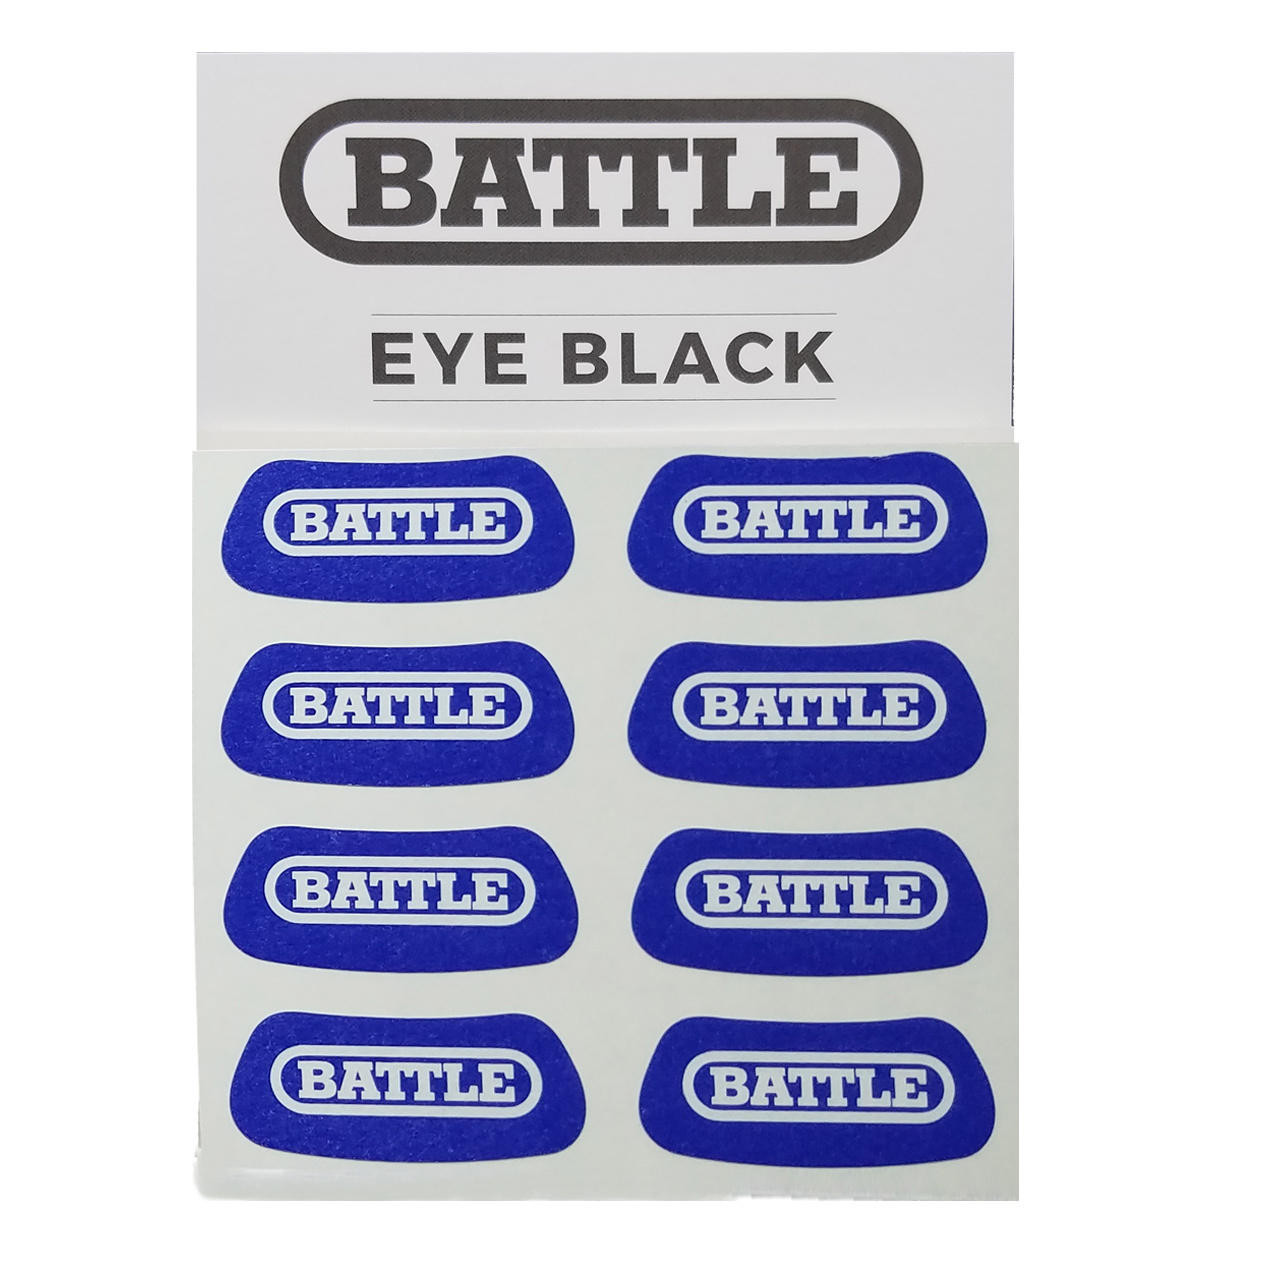 SportStar Eye Black Stickers With Marker – Green Gridiron, Inc.